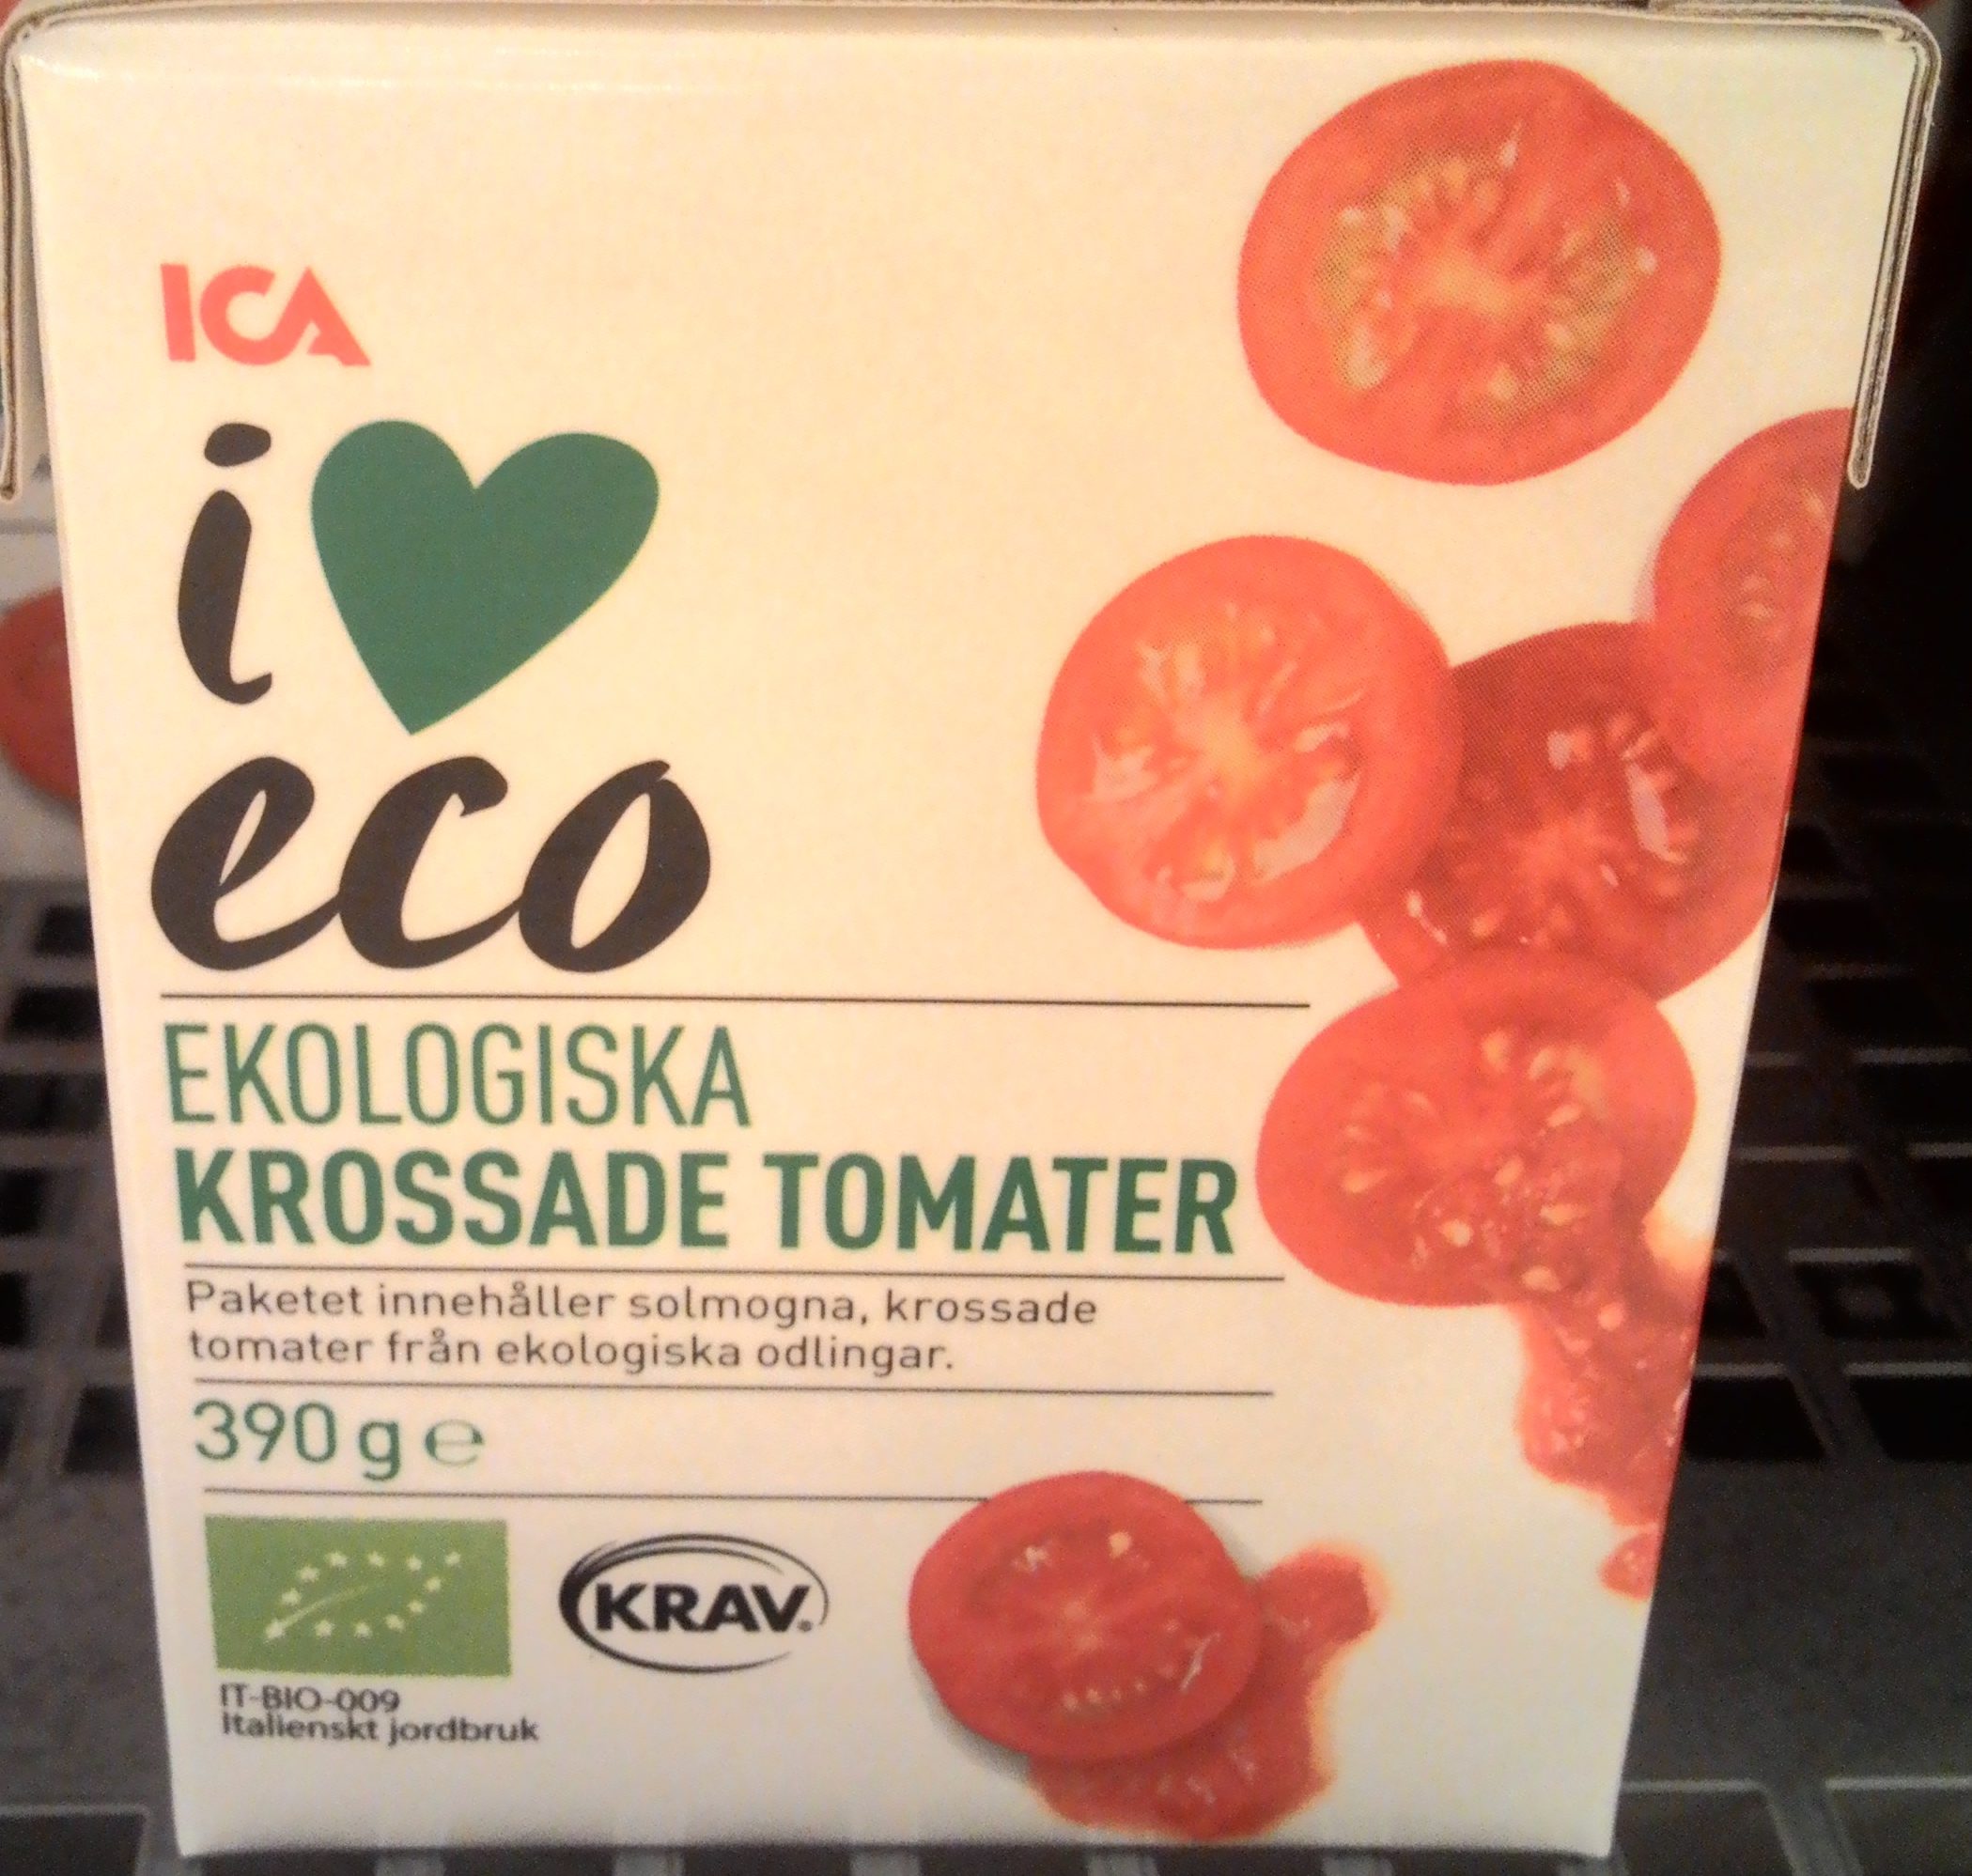 ICA i♥eco Ekologiska krossade tomater - Produkt - sv